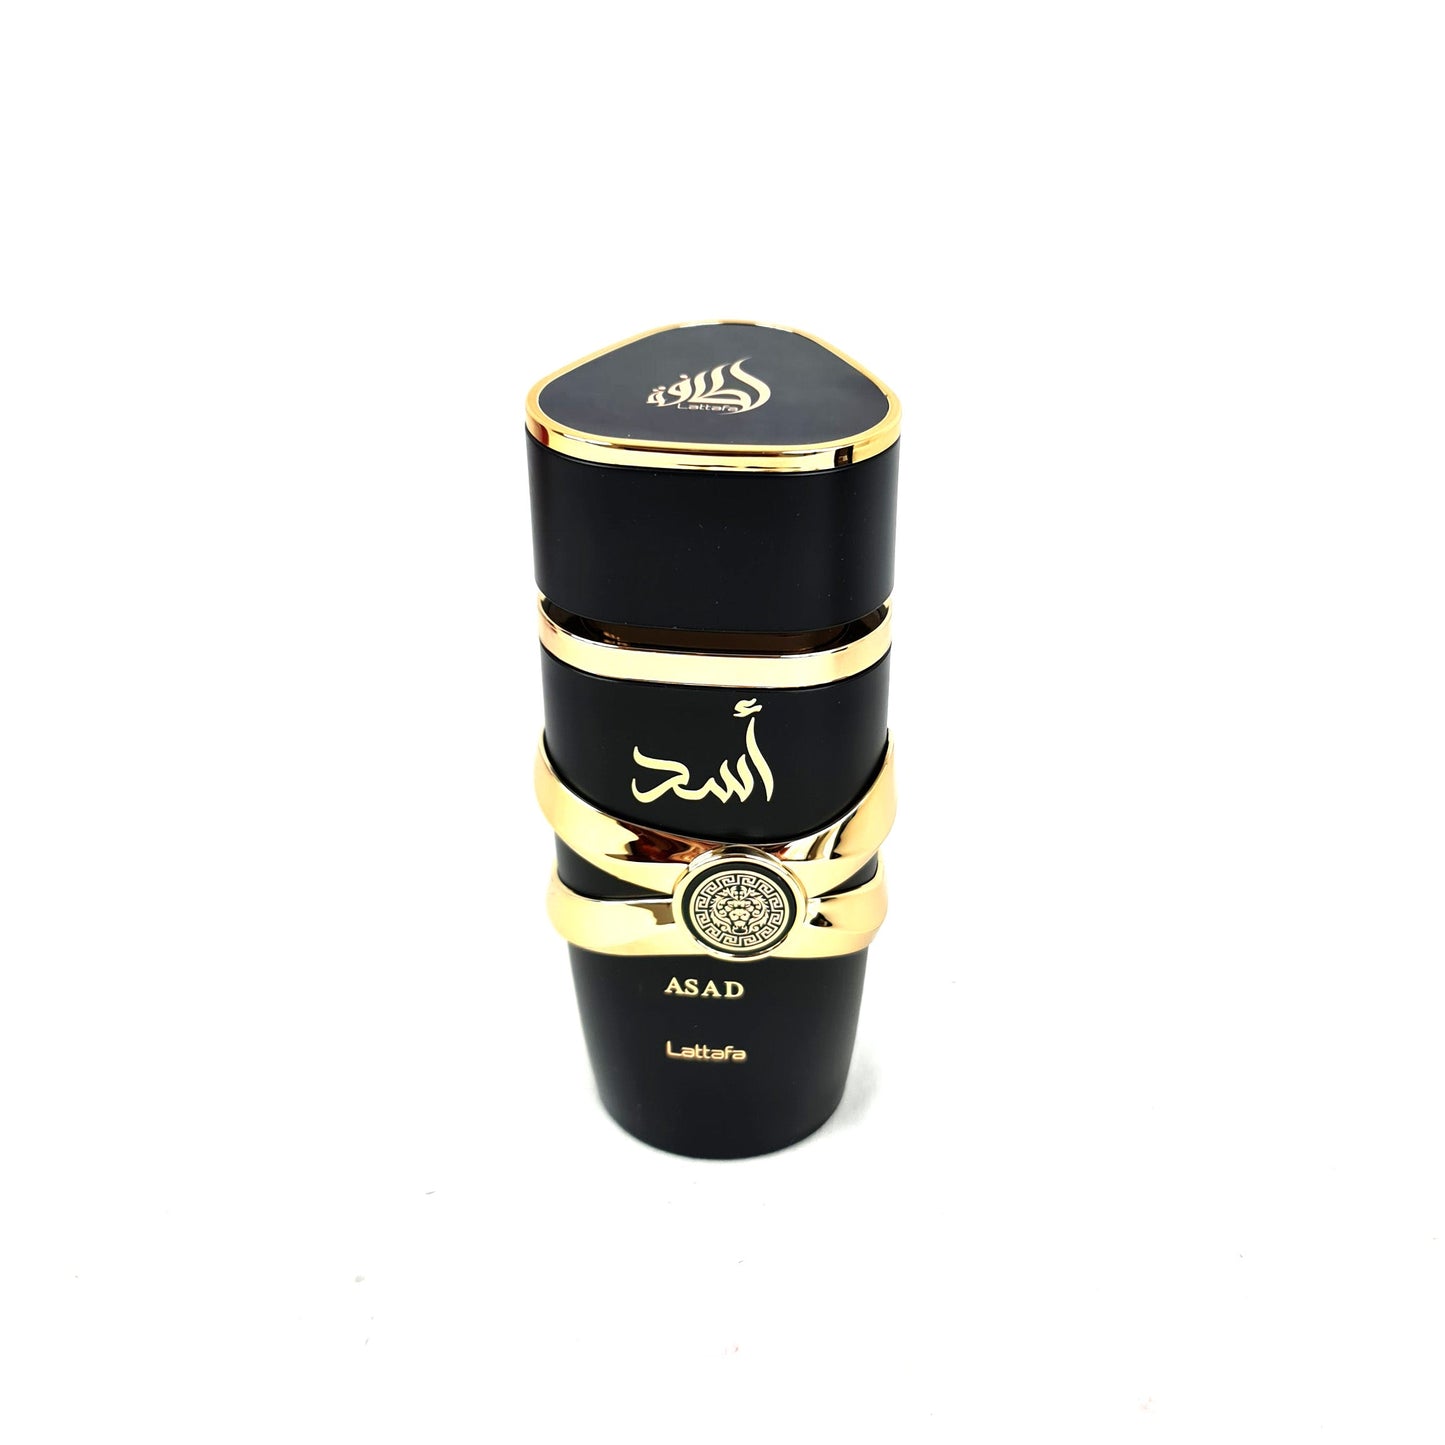 Asad Spray Perfume 100ml EDP by Lattafa